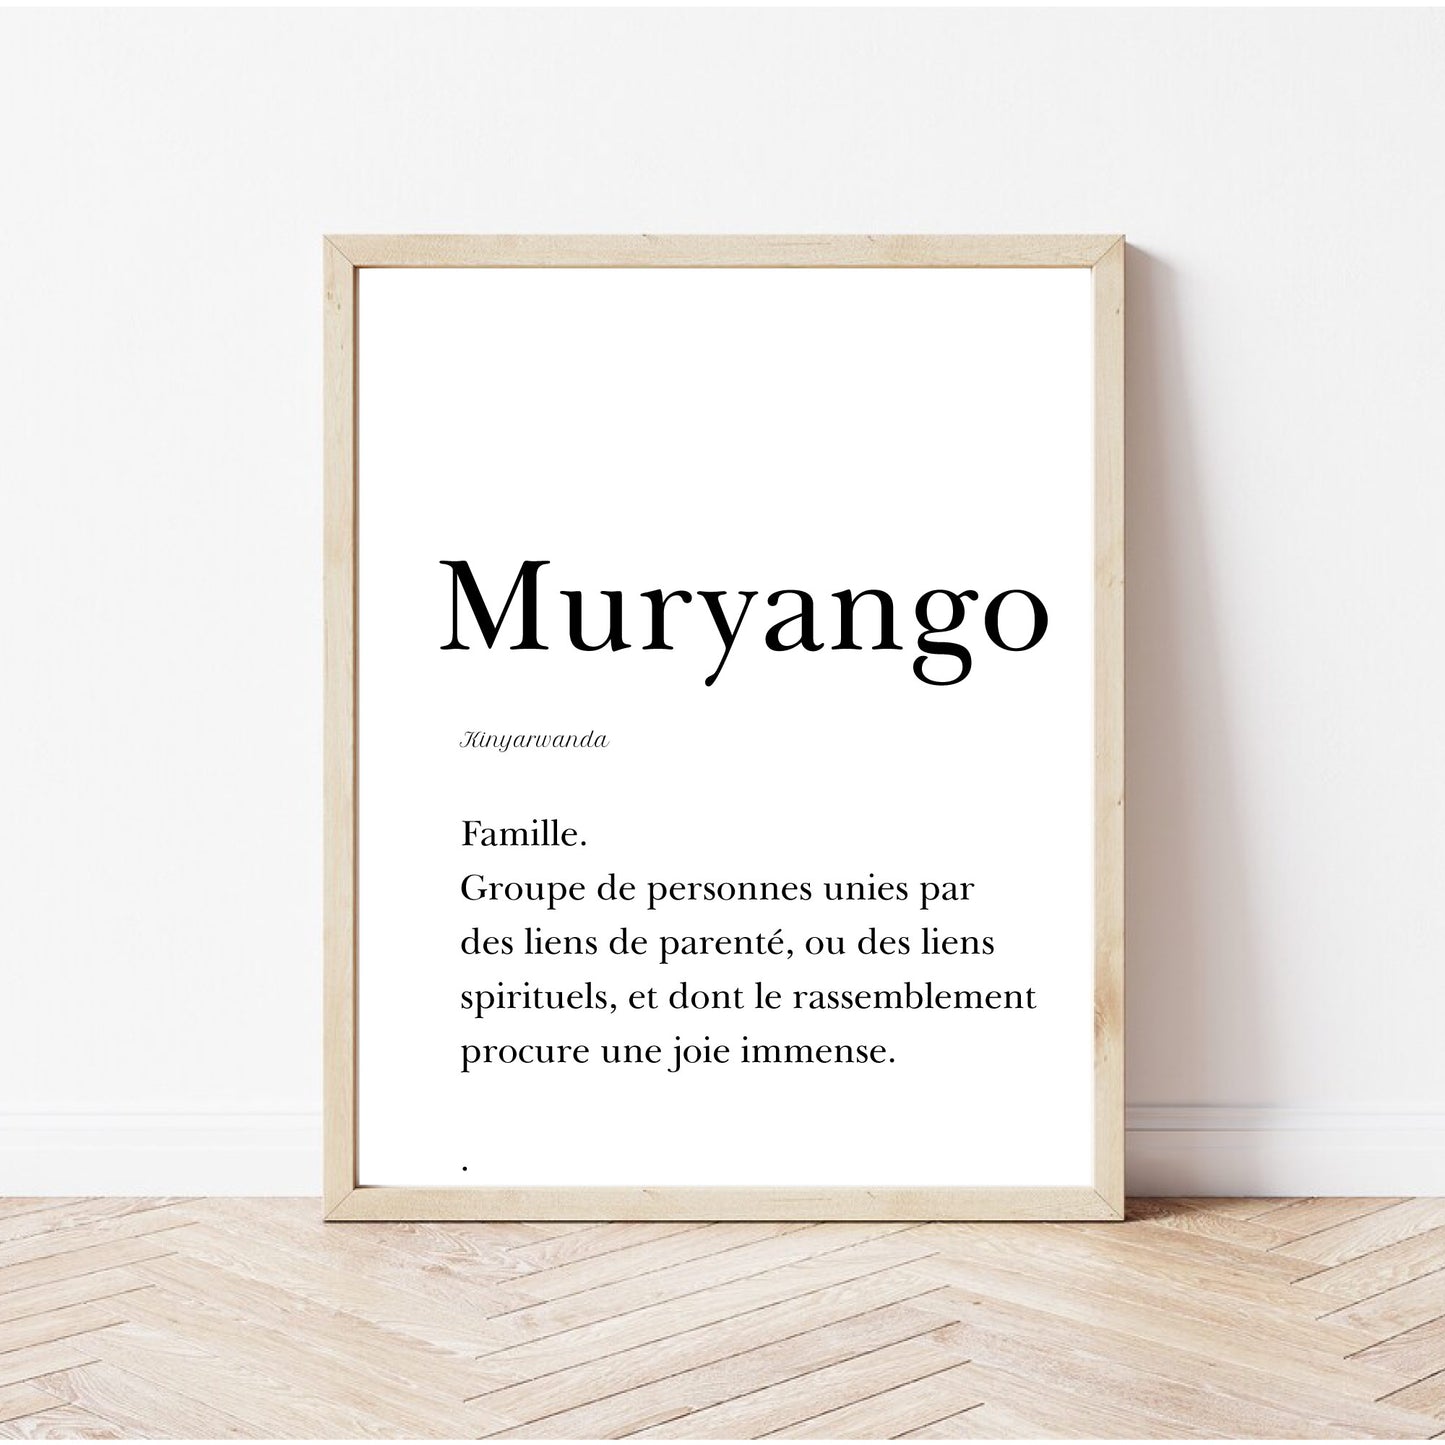 Affiche Famille en Kinyarwanda, "Muryango" - 30x40 cm